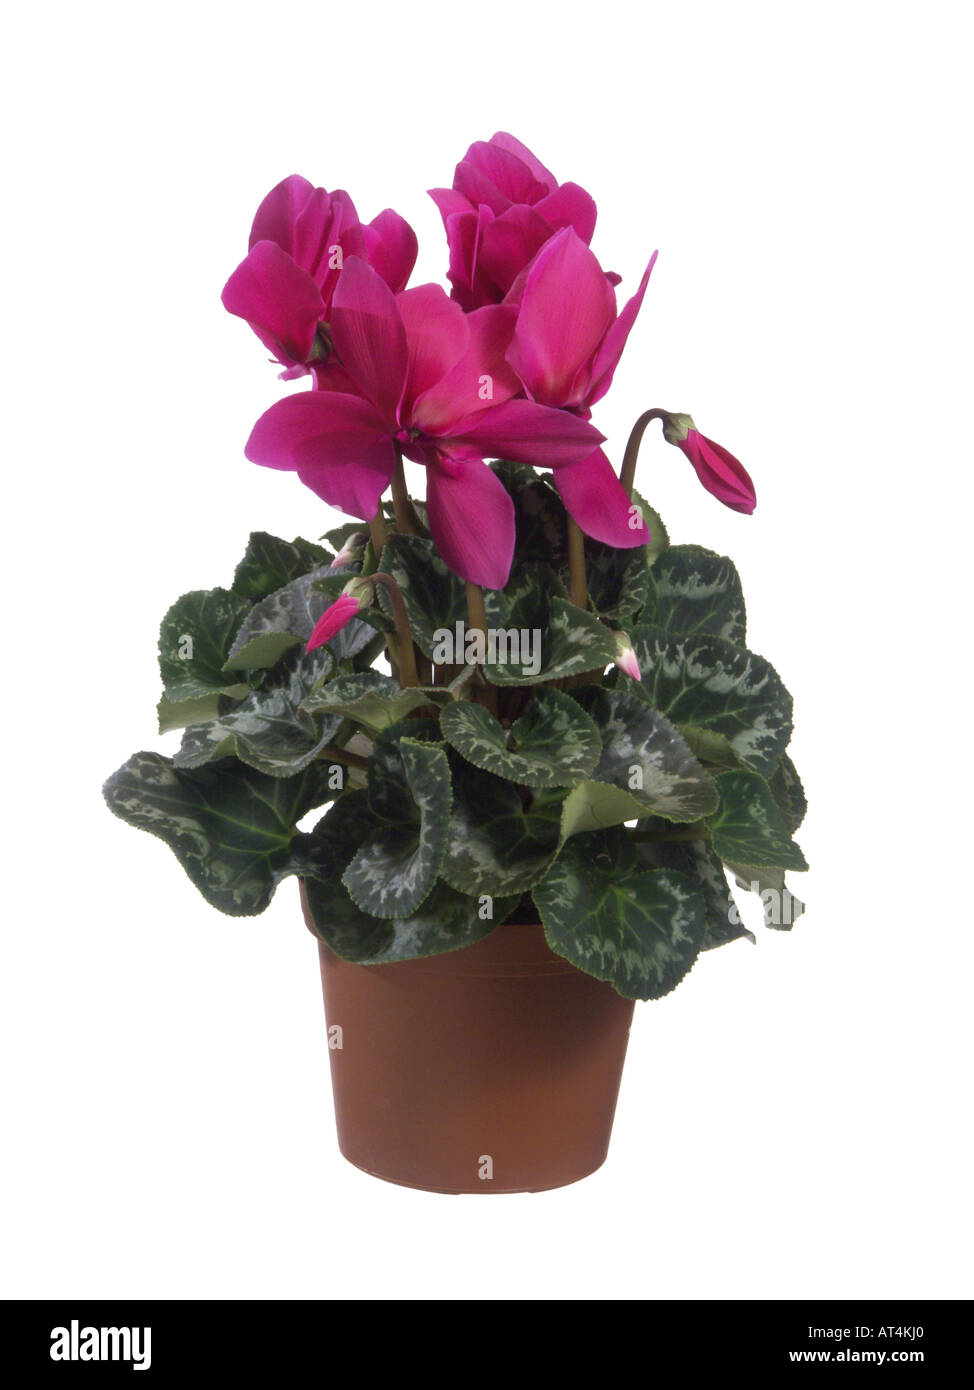 Florists Cyclamen (Cyclamen persicum), potted plant Stock Photo